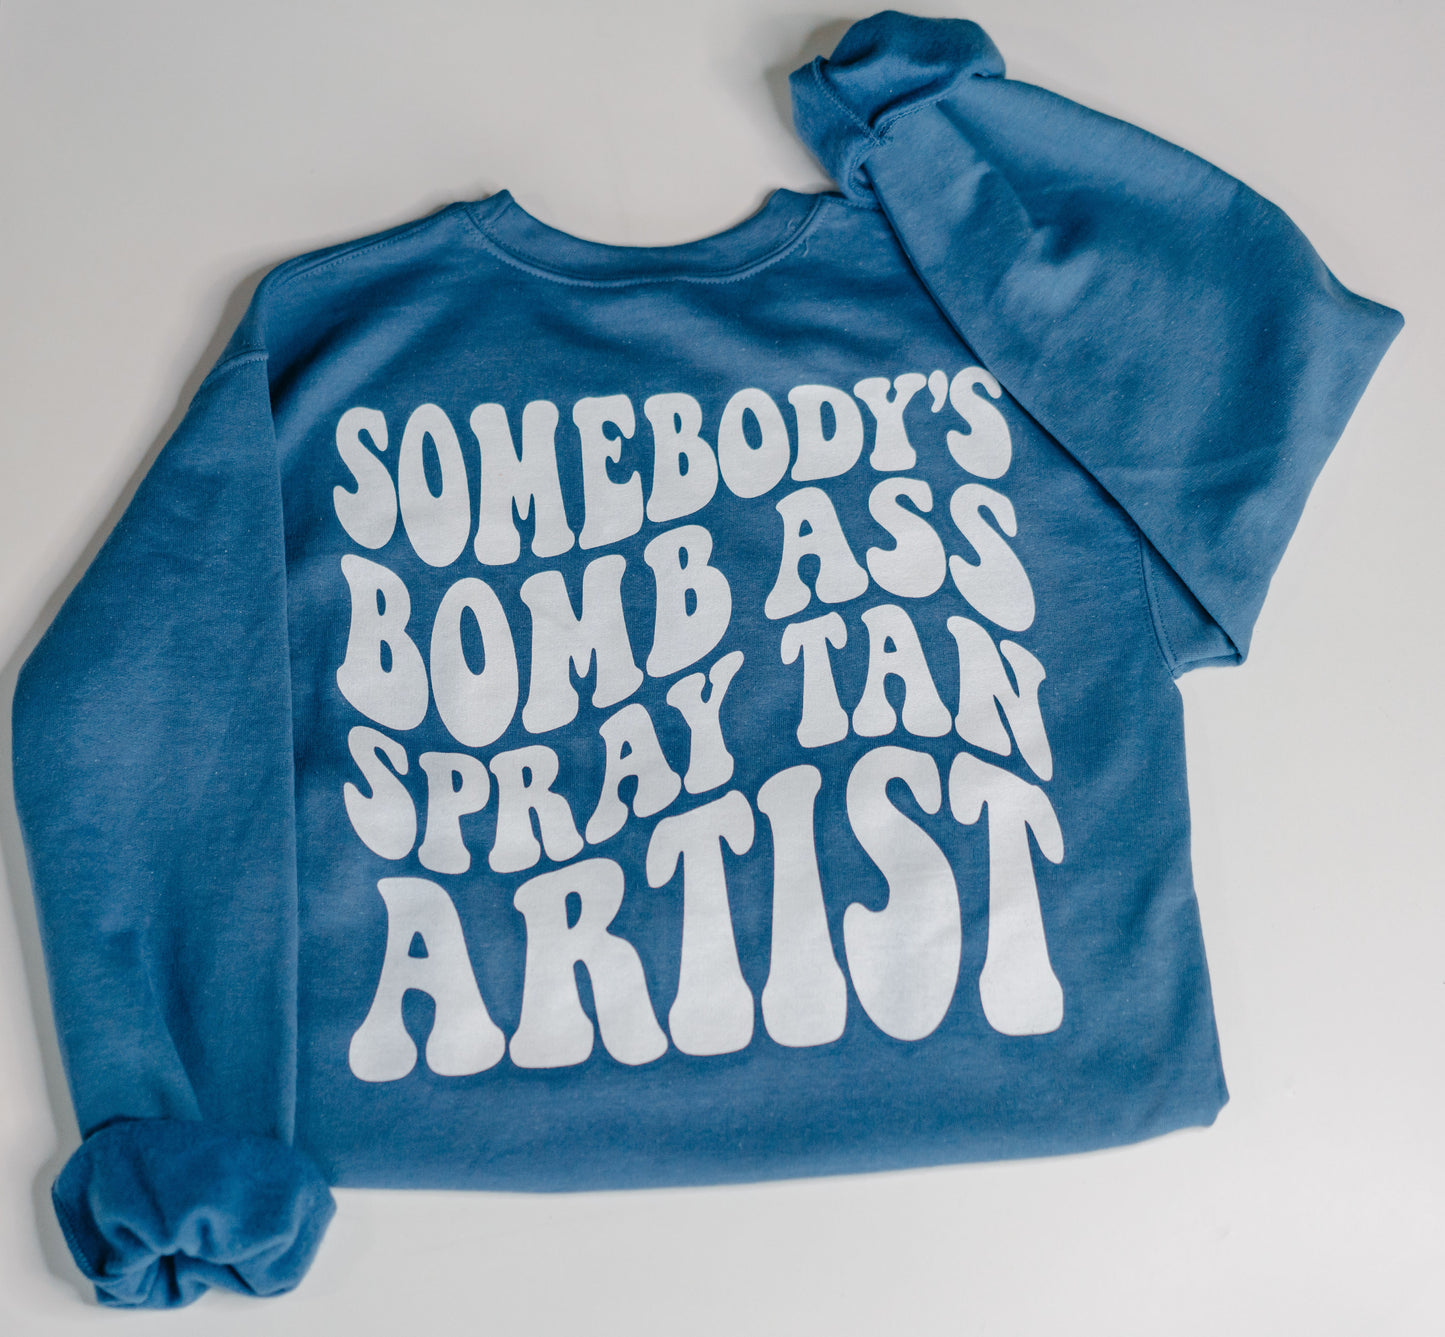 Somebody's Bomb Ass Spray Tan Artist Sweatshirt